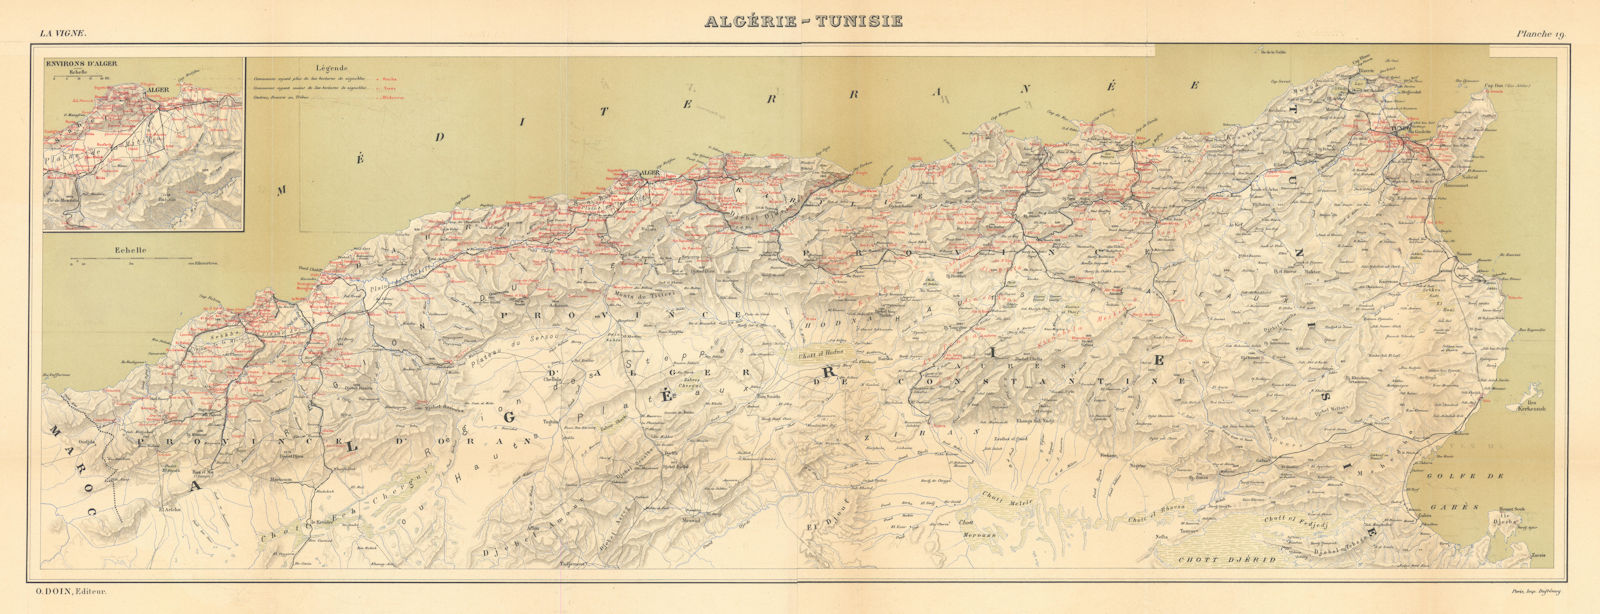 Associate Product Algérie Tunisie. Algeria & Tunisia. French North Africa wine map HAUSERMANN 1901